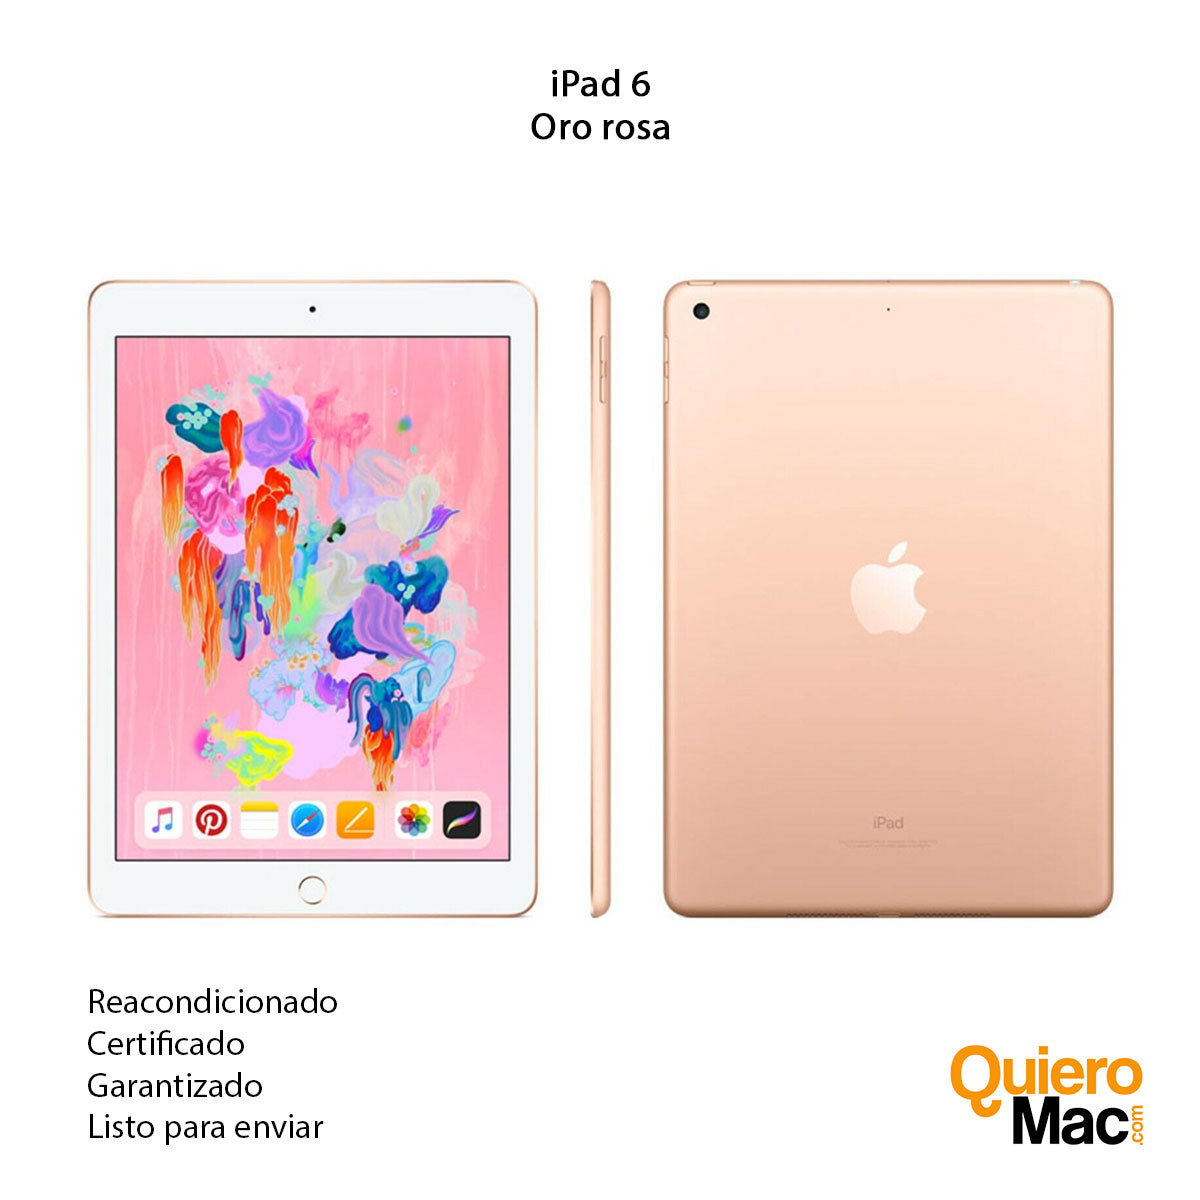 iPad Air reacondicionado de 64 GB con Wi-Fi + Cellular - Oro rosa